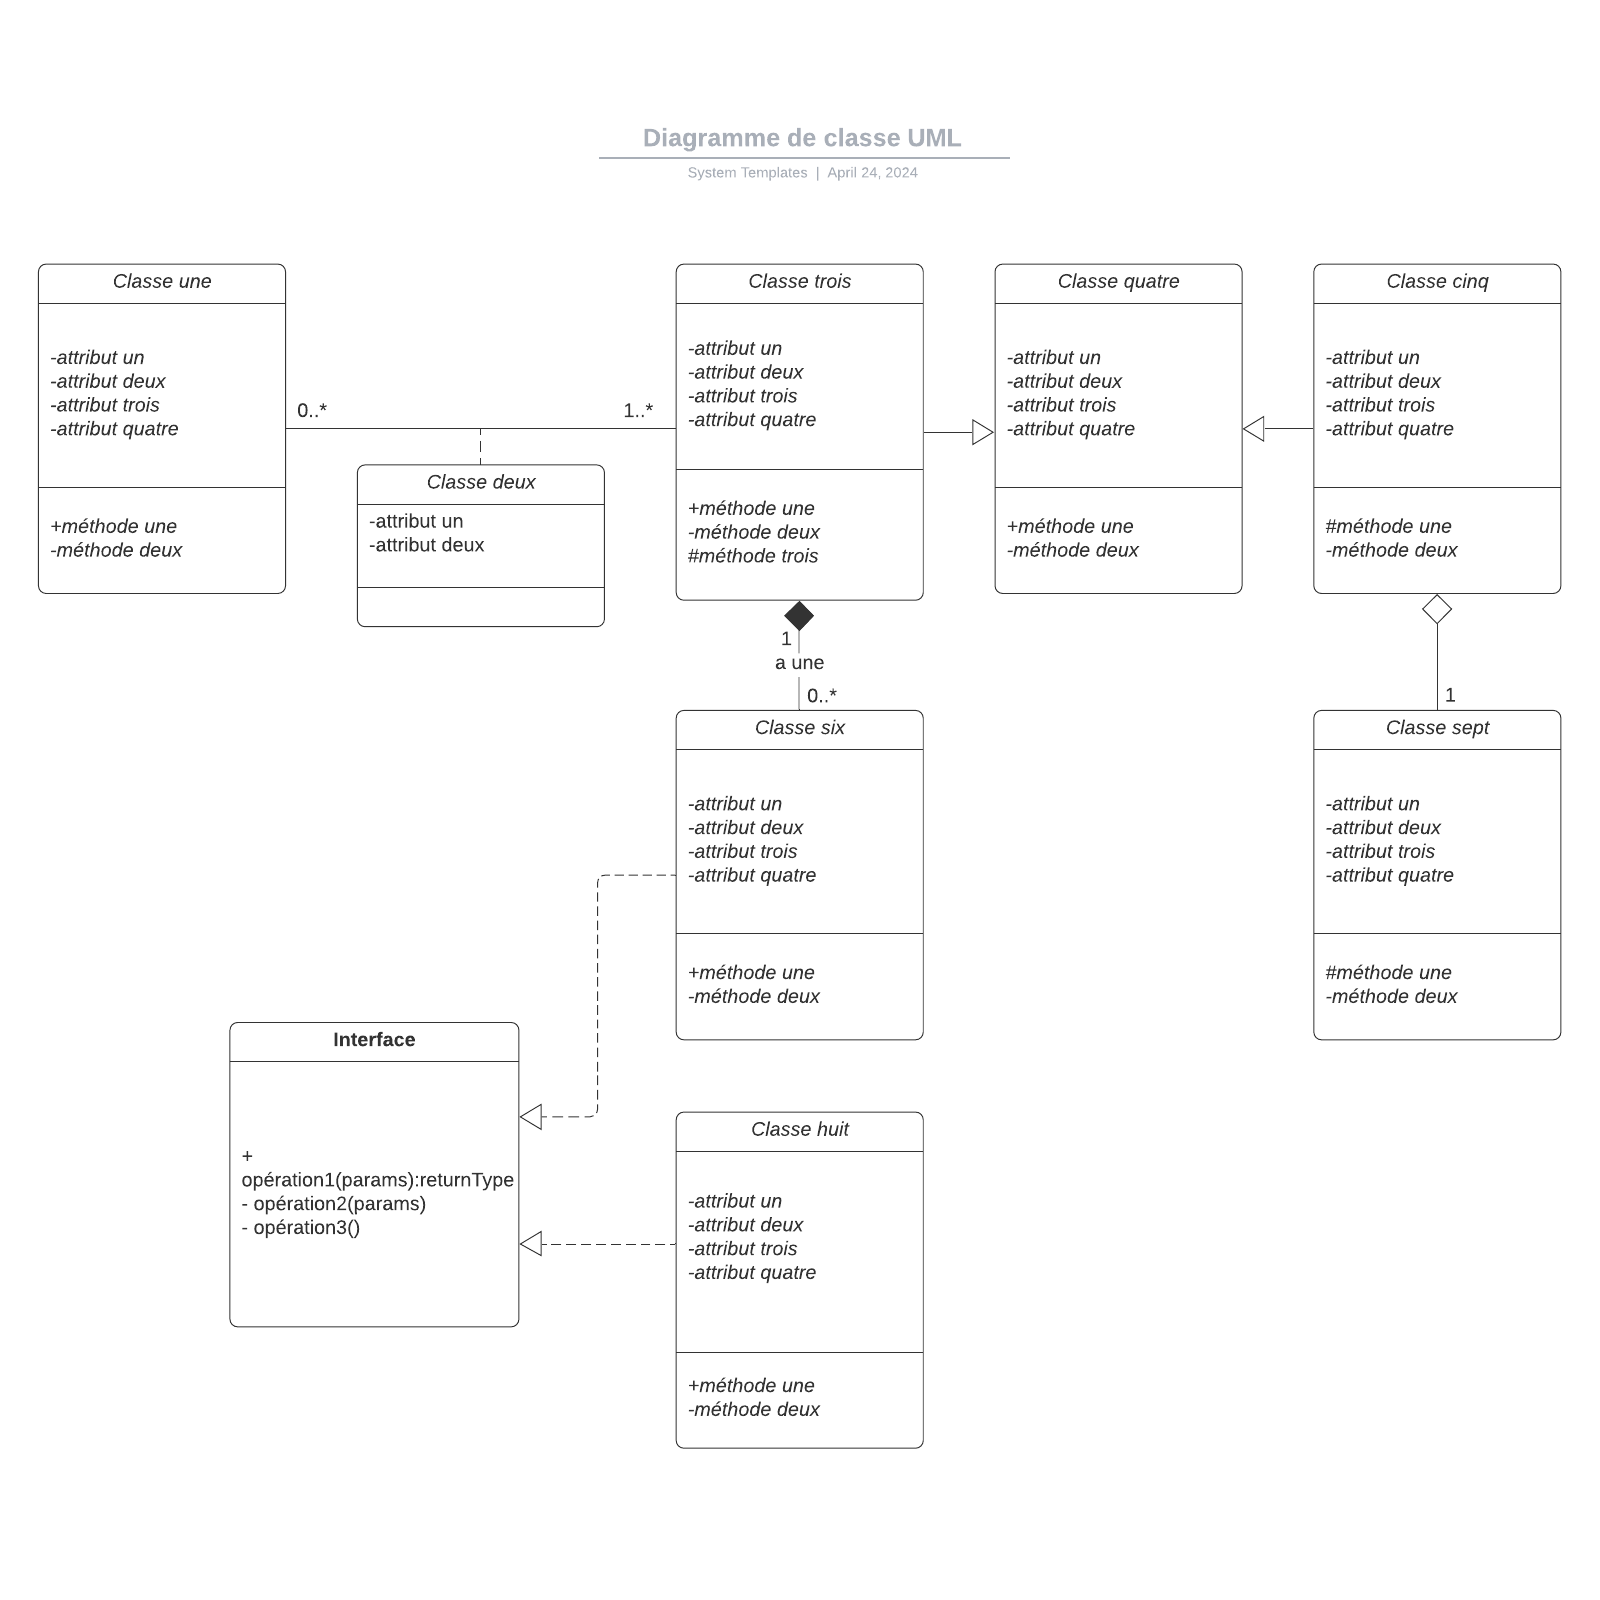 exemple de diagramme de classe UML vierge